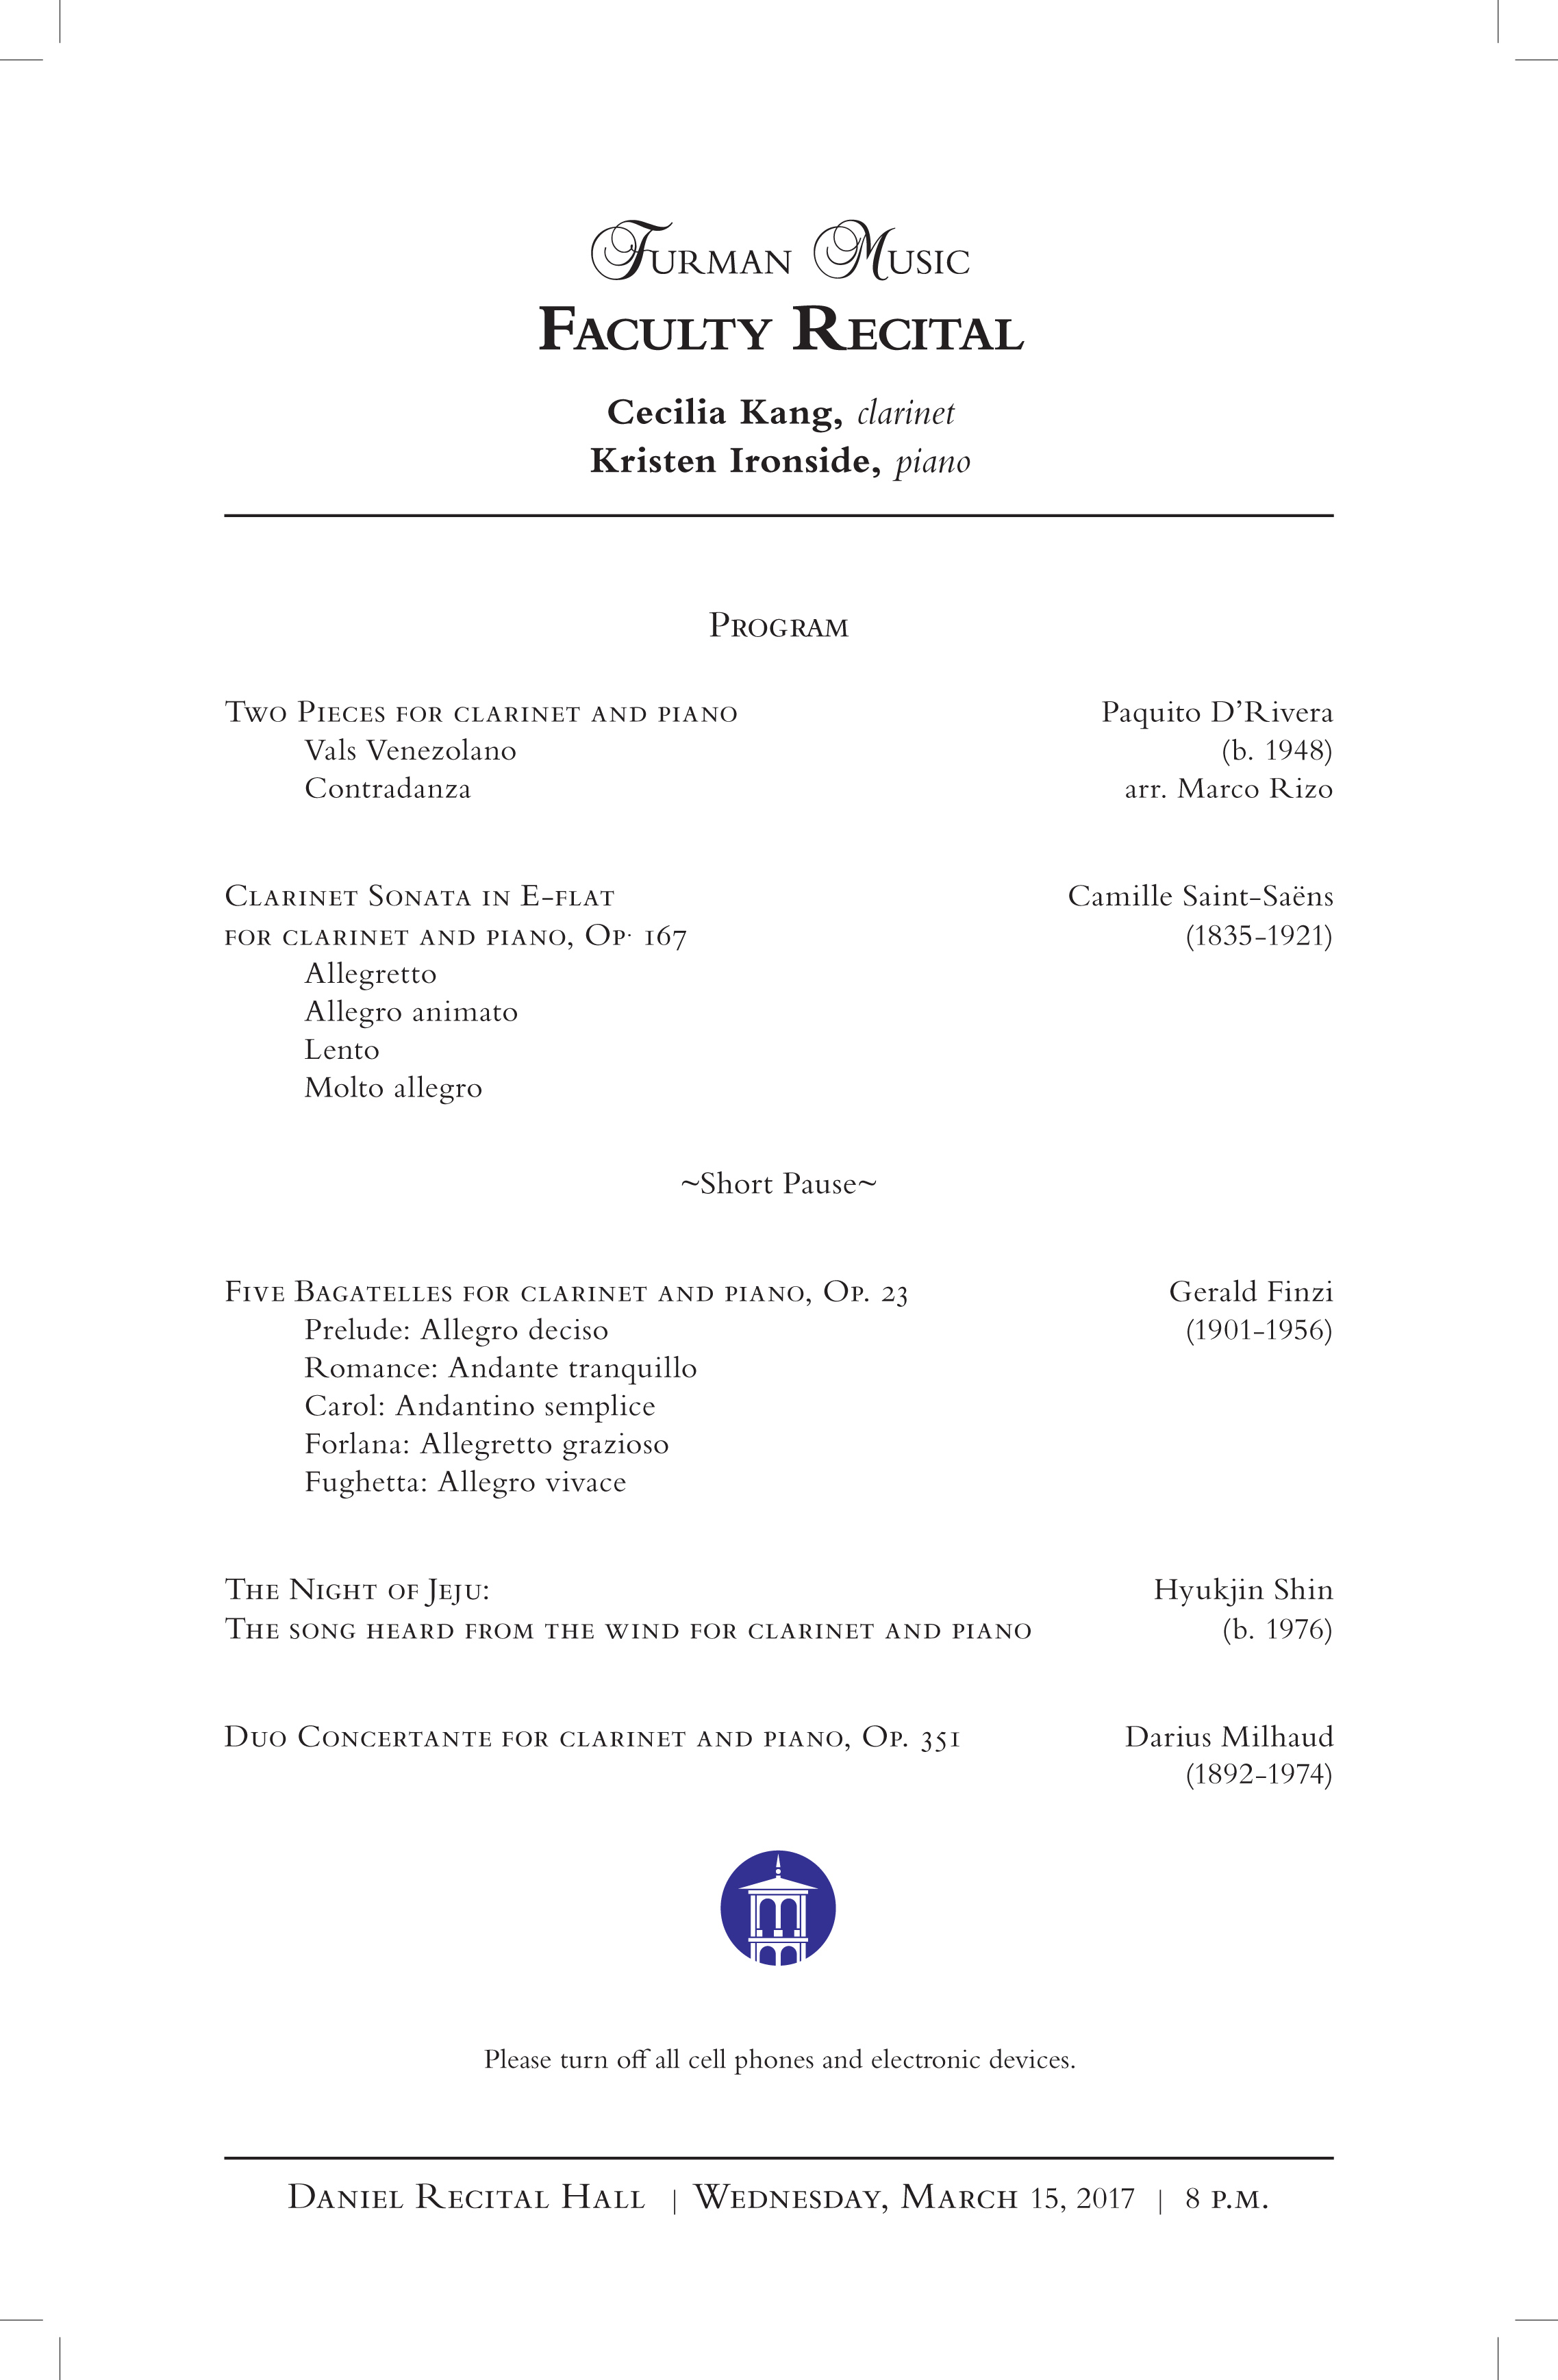 Dr.-Cecilia-Kang-Faculty-Recital-Furman-Univeristy.jpg